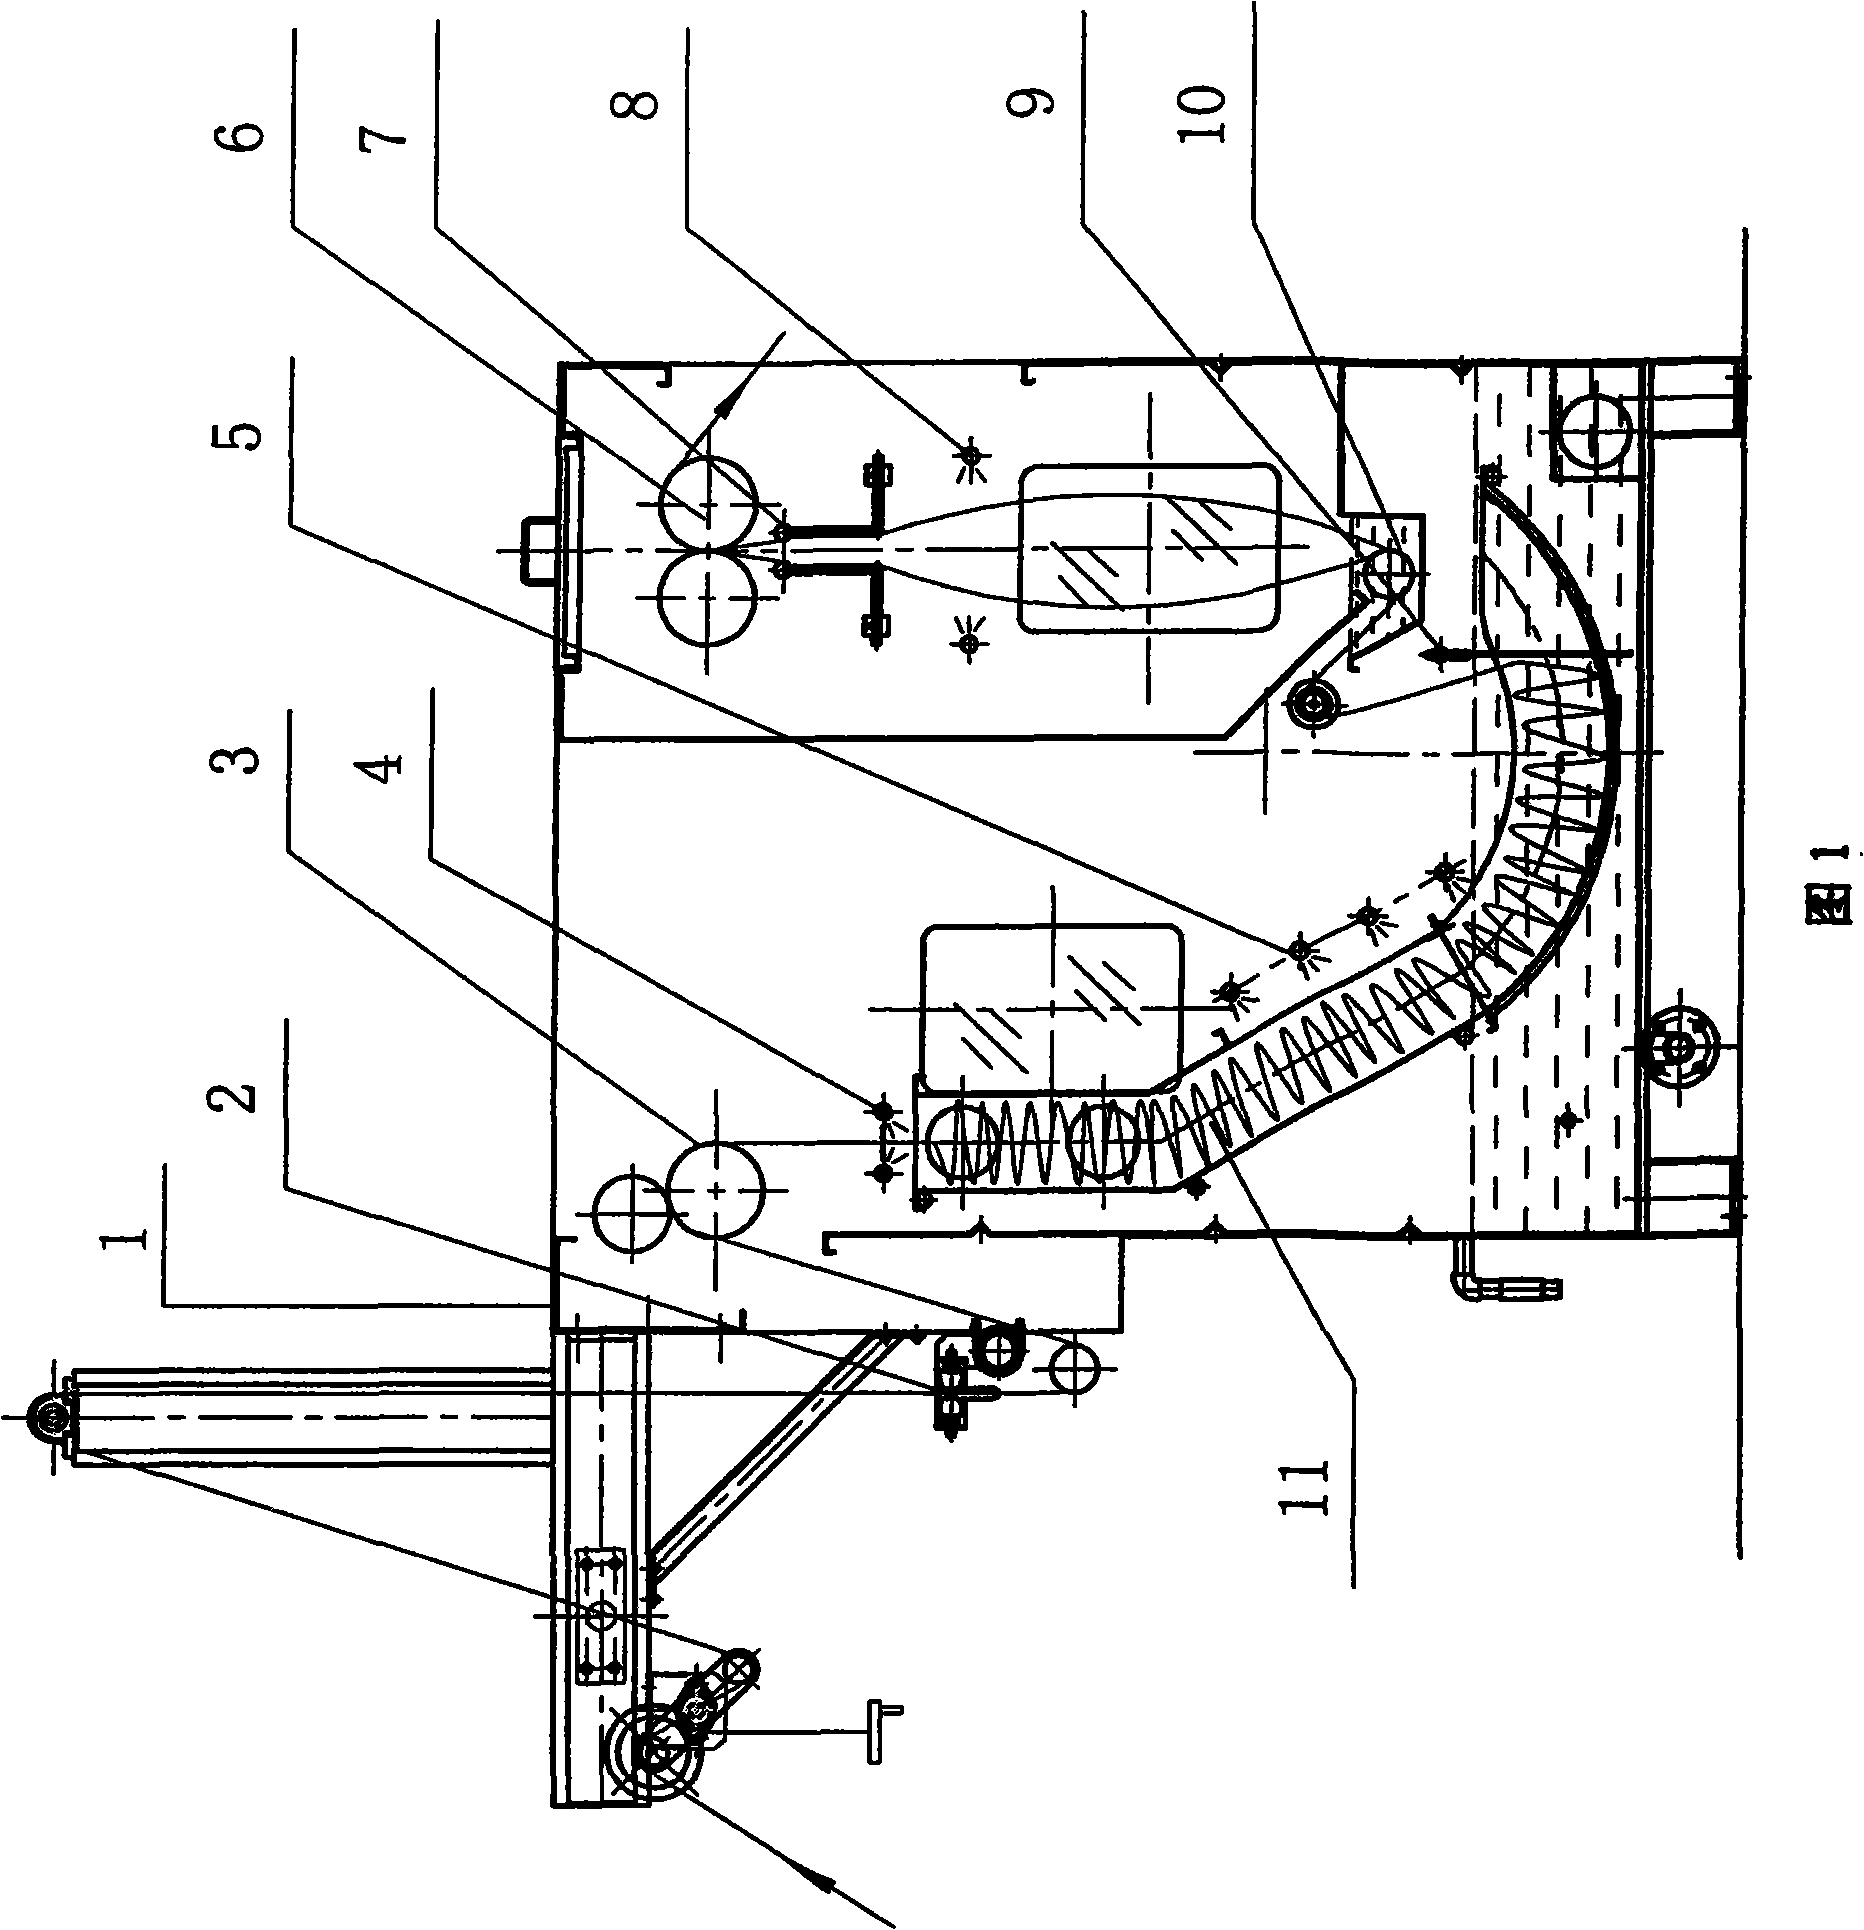 J-shape stacked pickling tank for knitting tubular open width refining rinsing combination machine